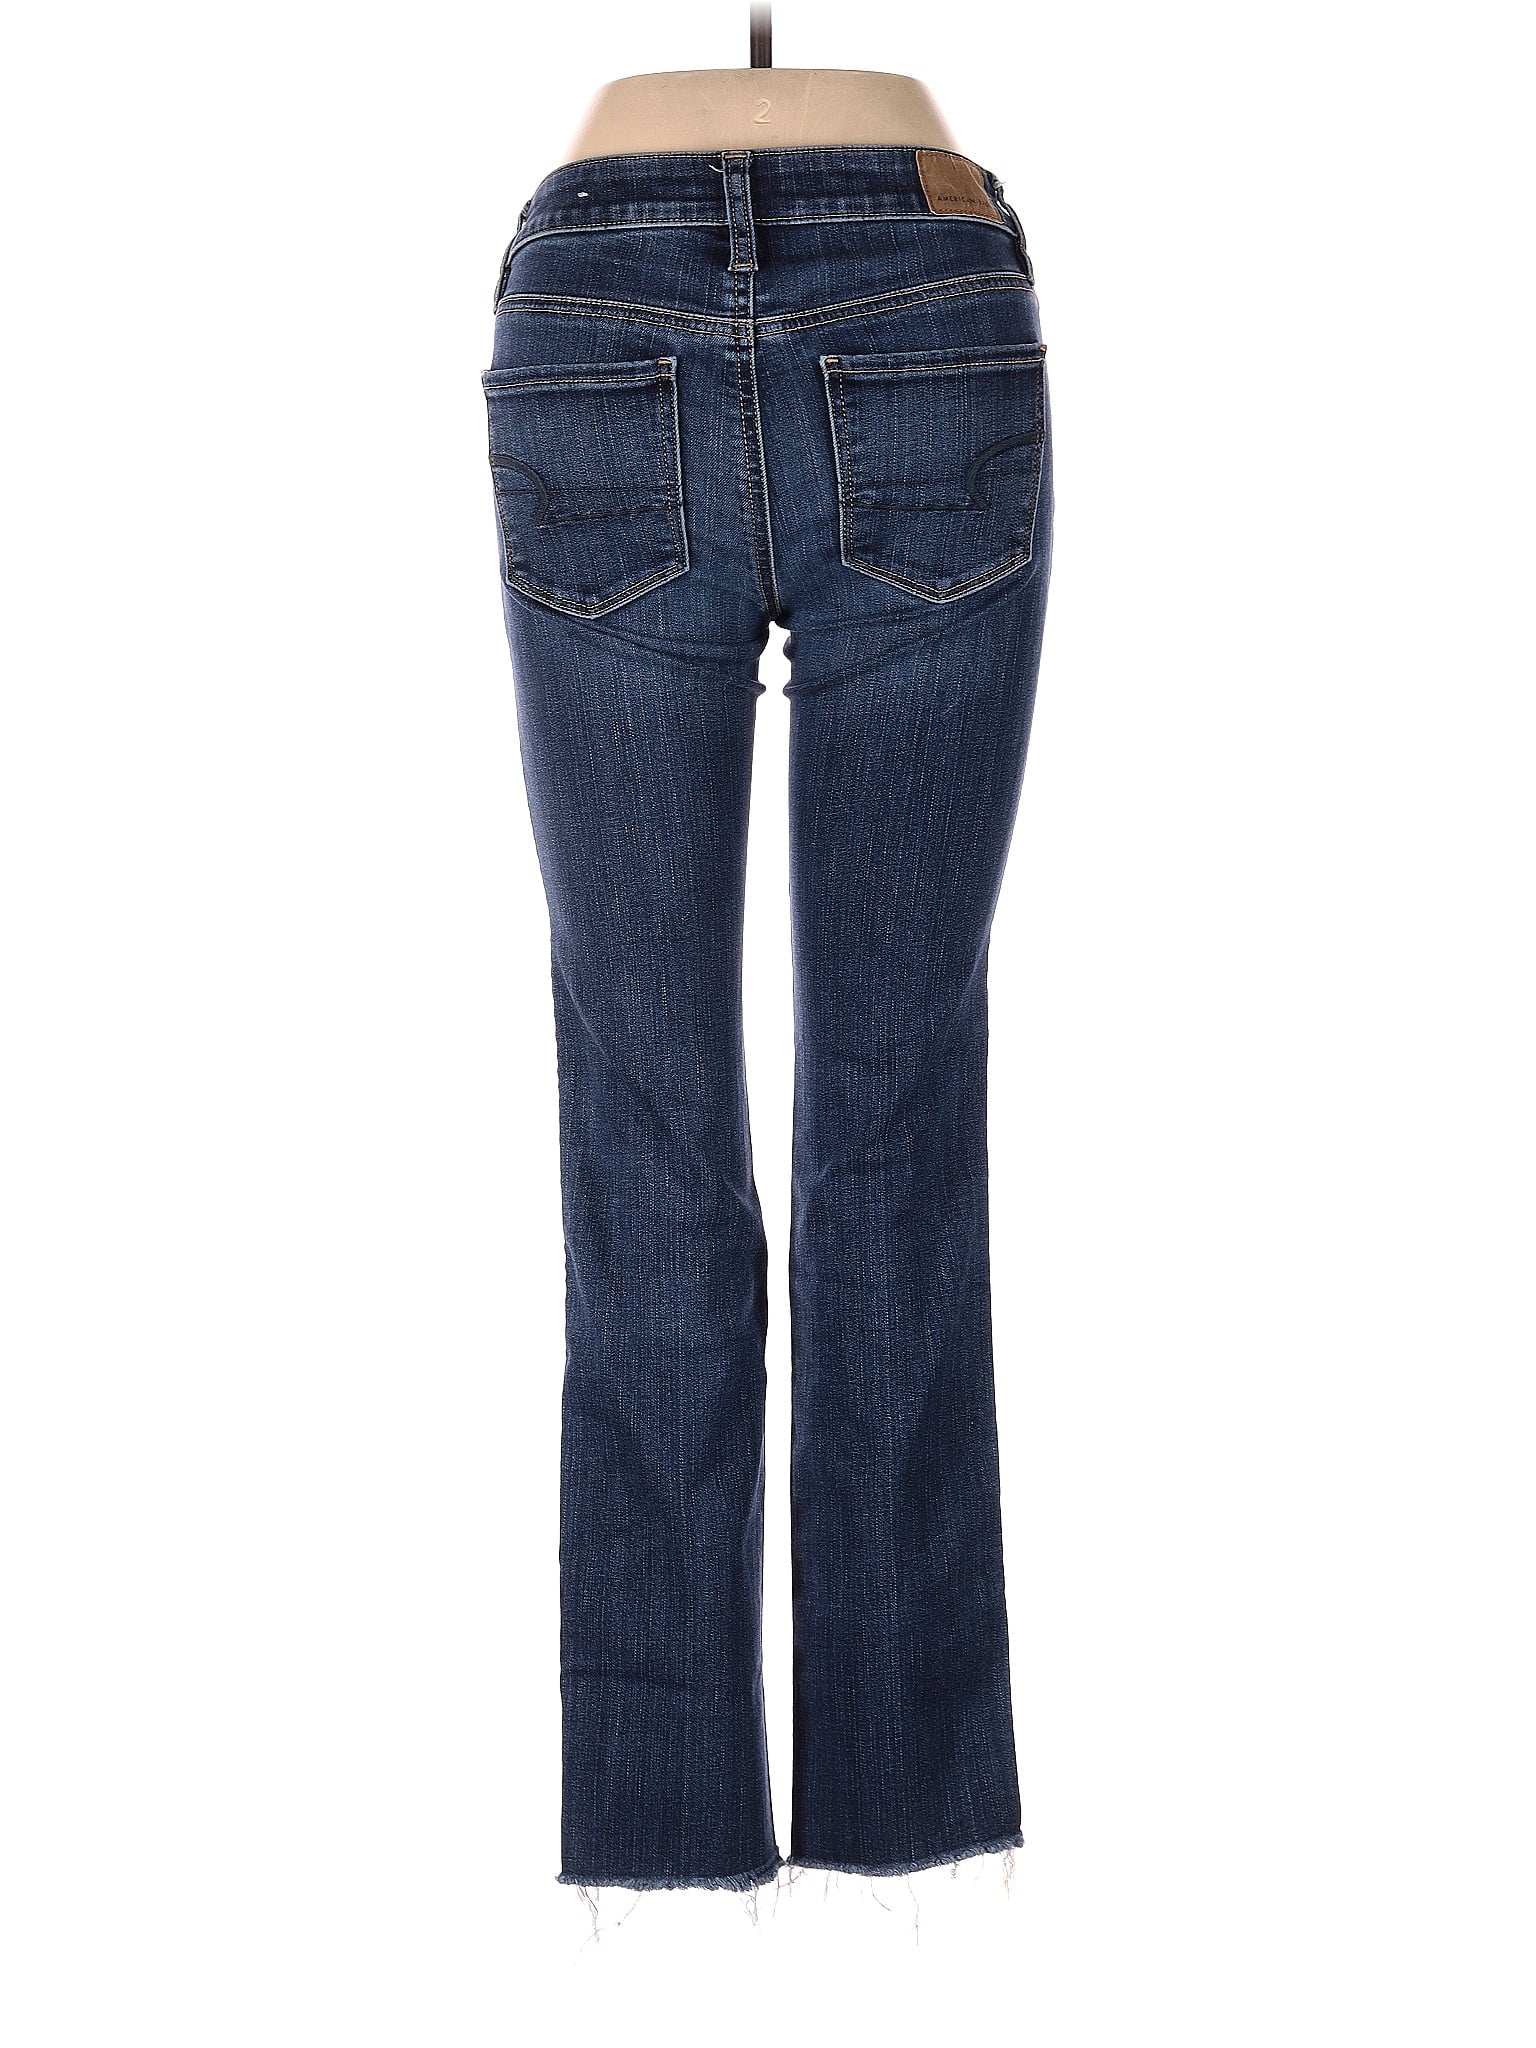 Jeans size - 00